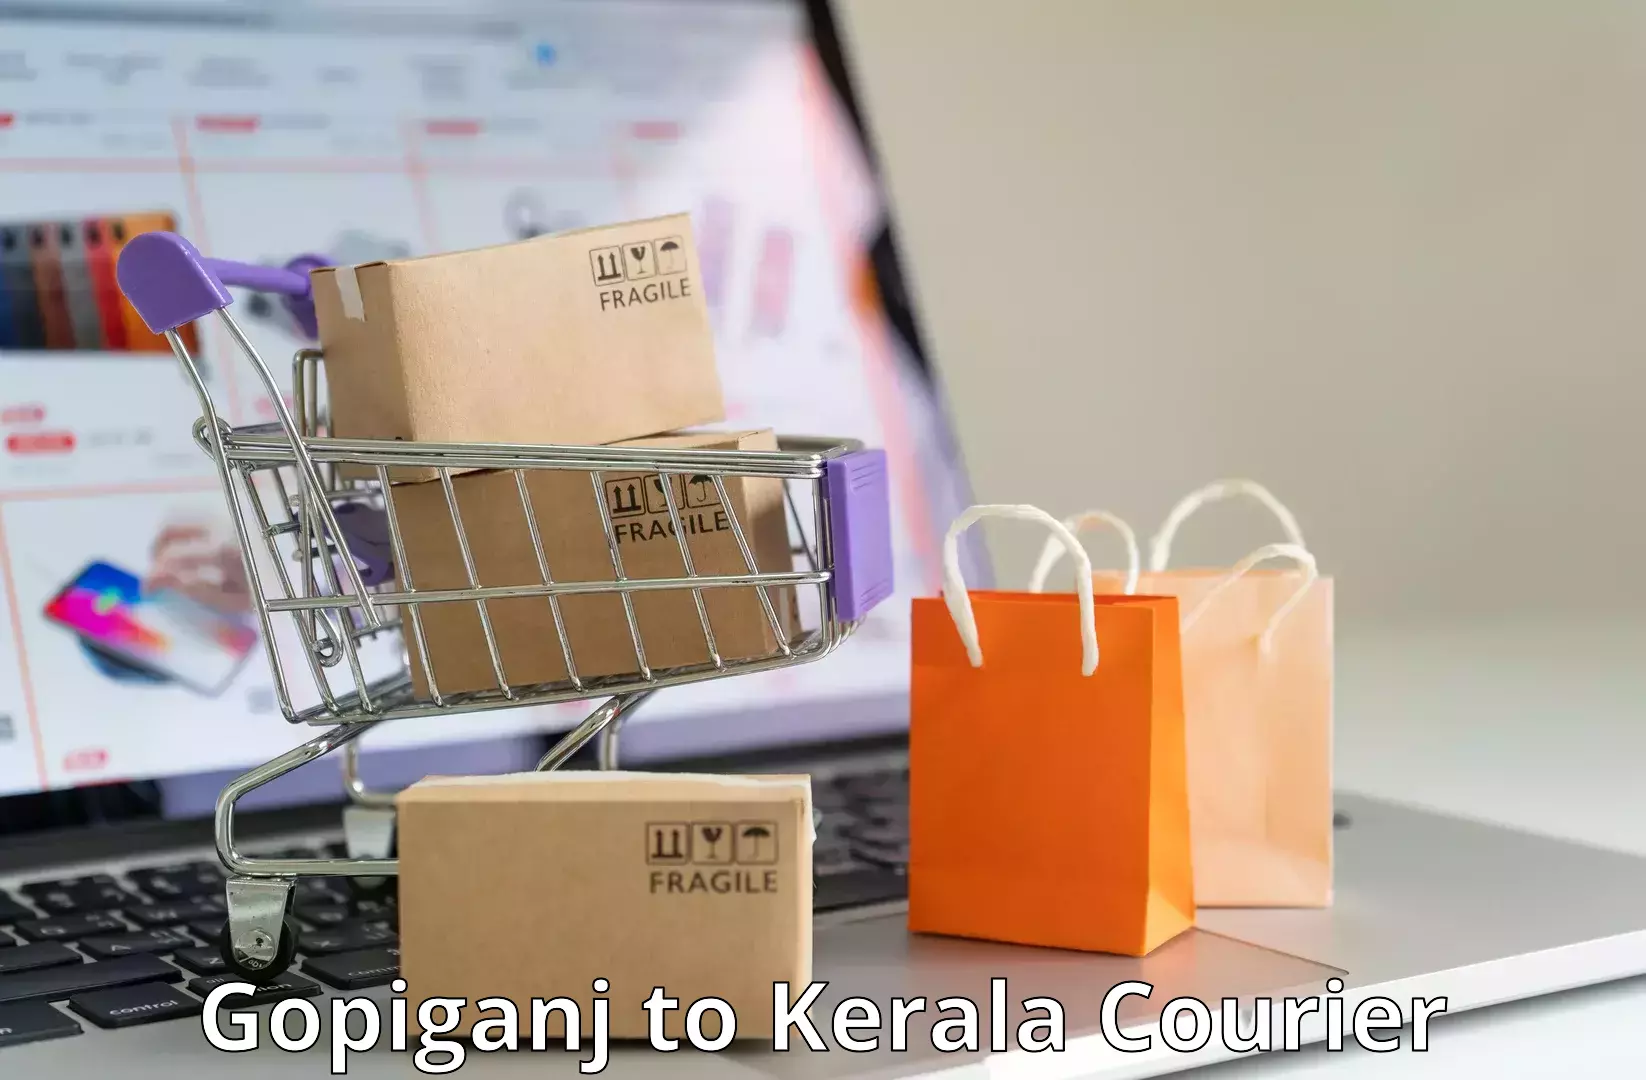 Advanced delivery solutions Gopiganj to Kattappana